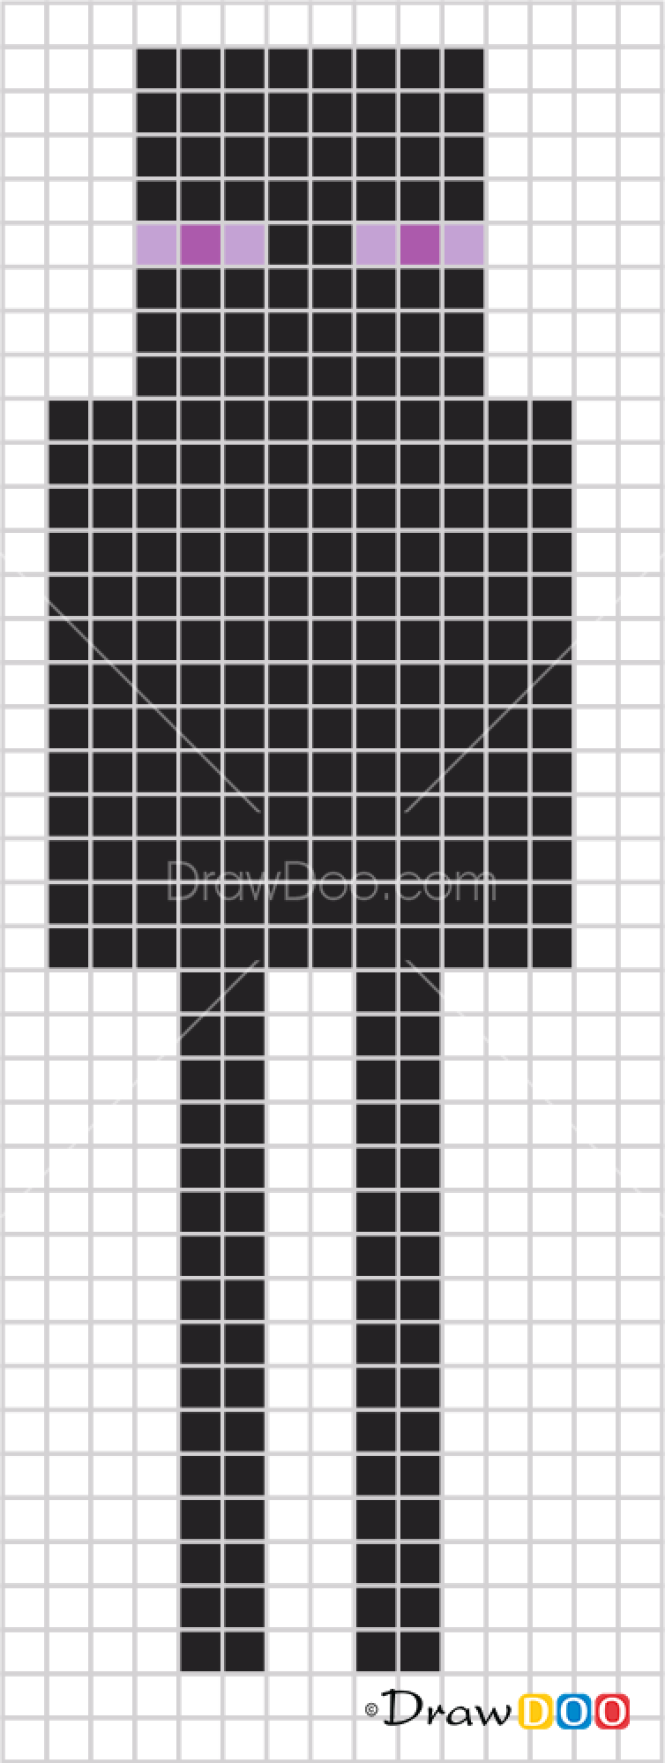 enderman pixel art template